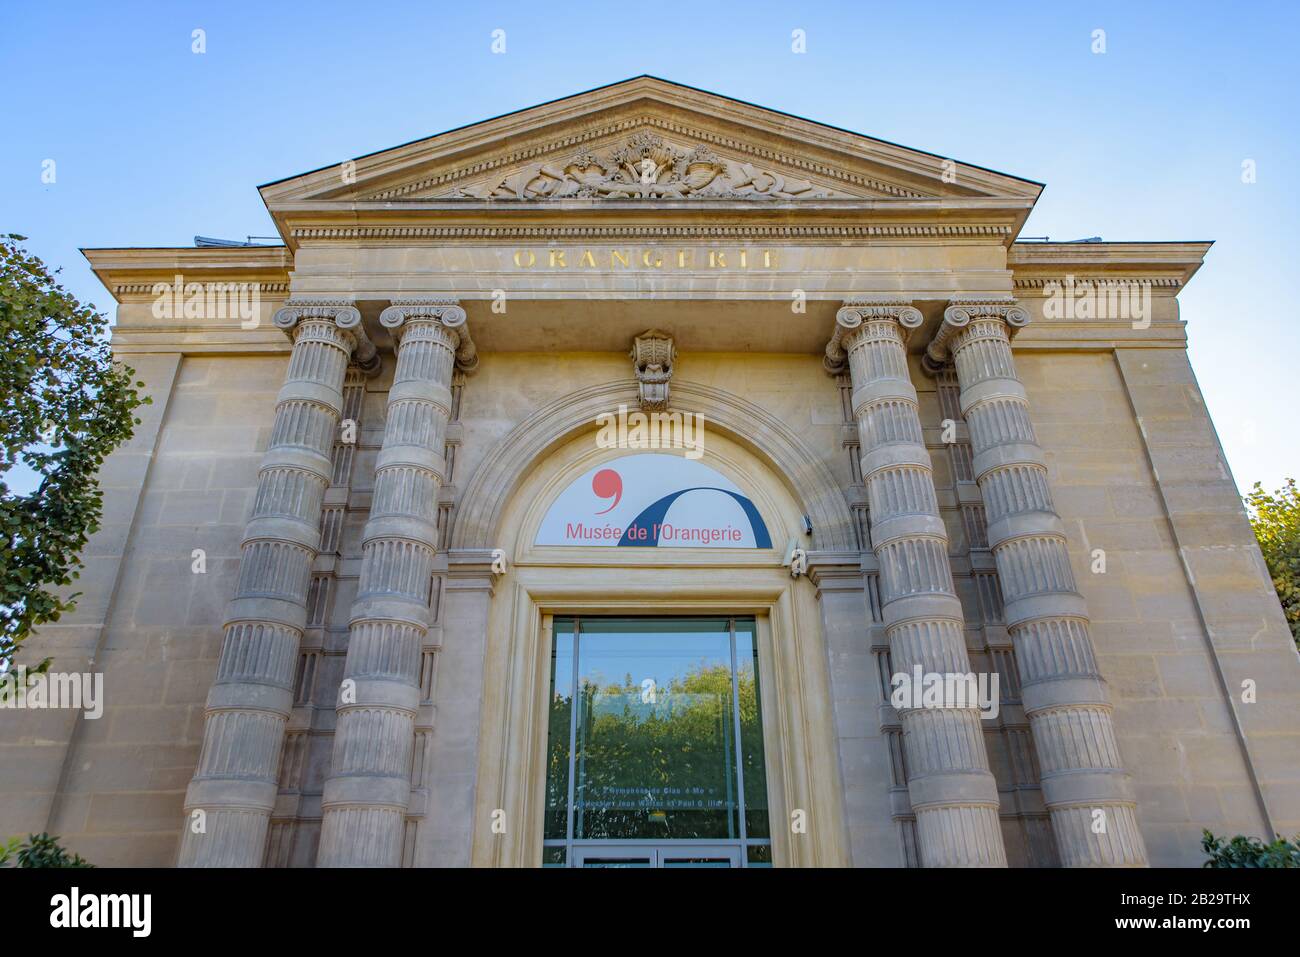 Musée de l'Orangerie (Orangerie museum), art gallery of impressionist and post-impressionist paintings in Paris, France Stock Photo